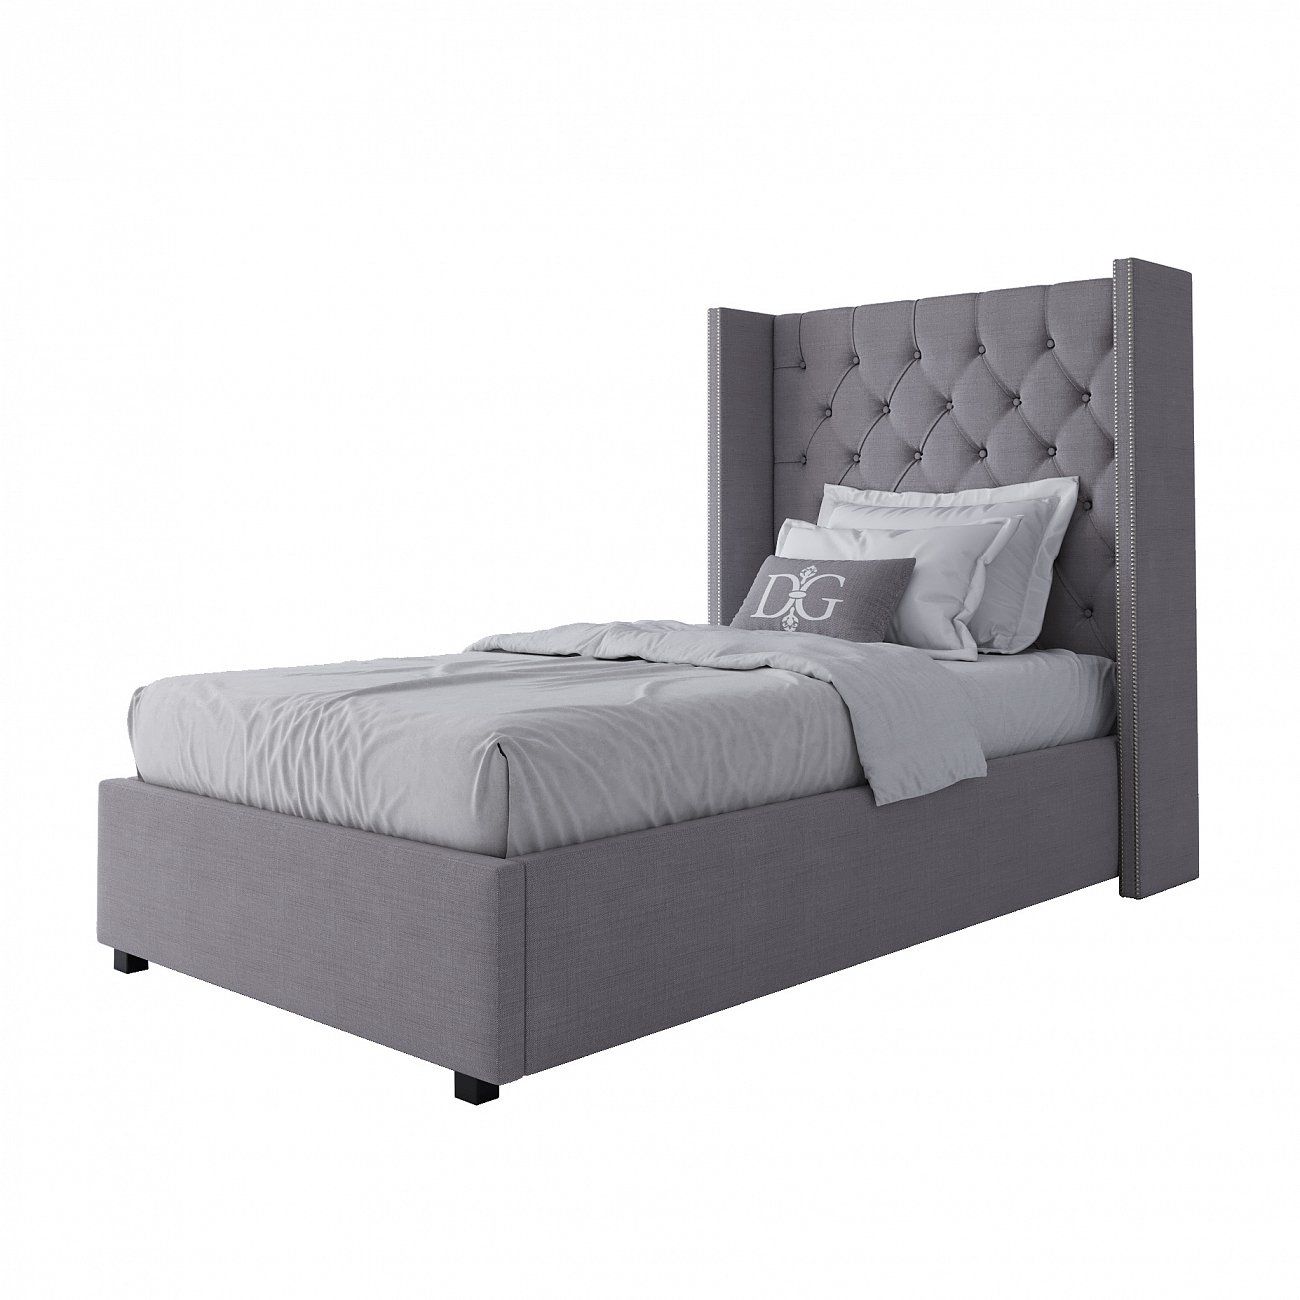 Single bed 90x200 cm grey Wing